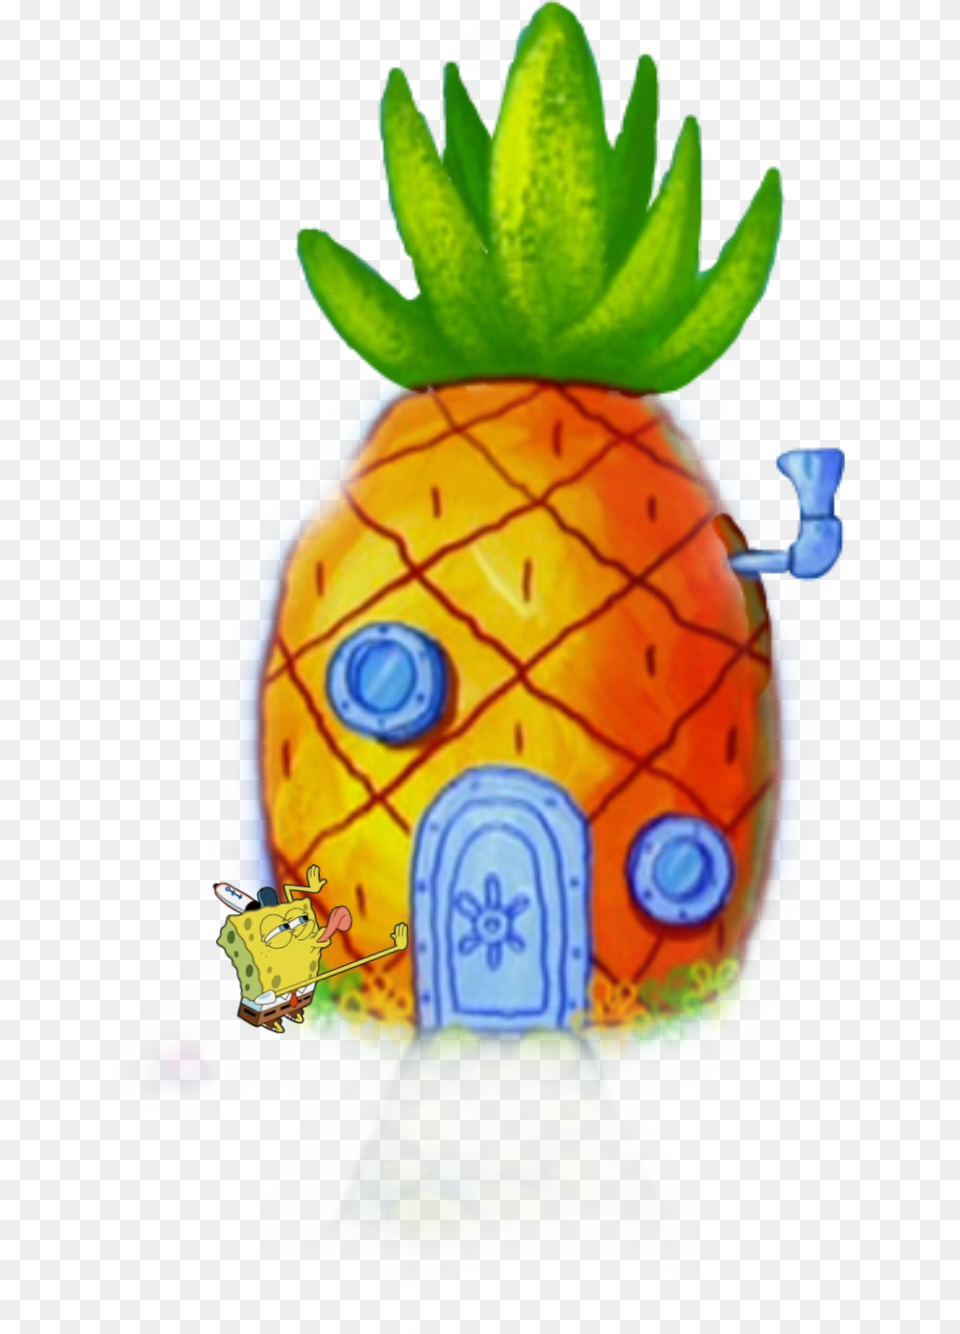 Pineapple Spongebob Homesweethome Casa Do Bob Esponja, Food, Fruit, Plant, Produce Free Transparent Png